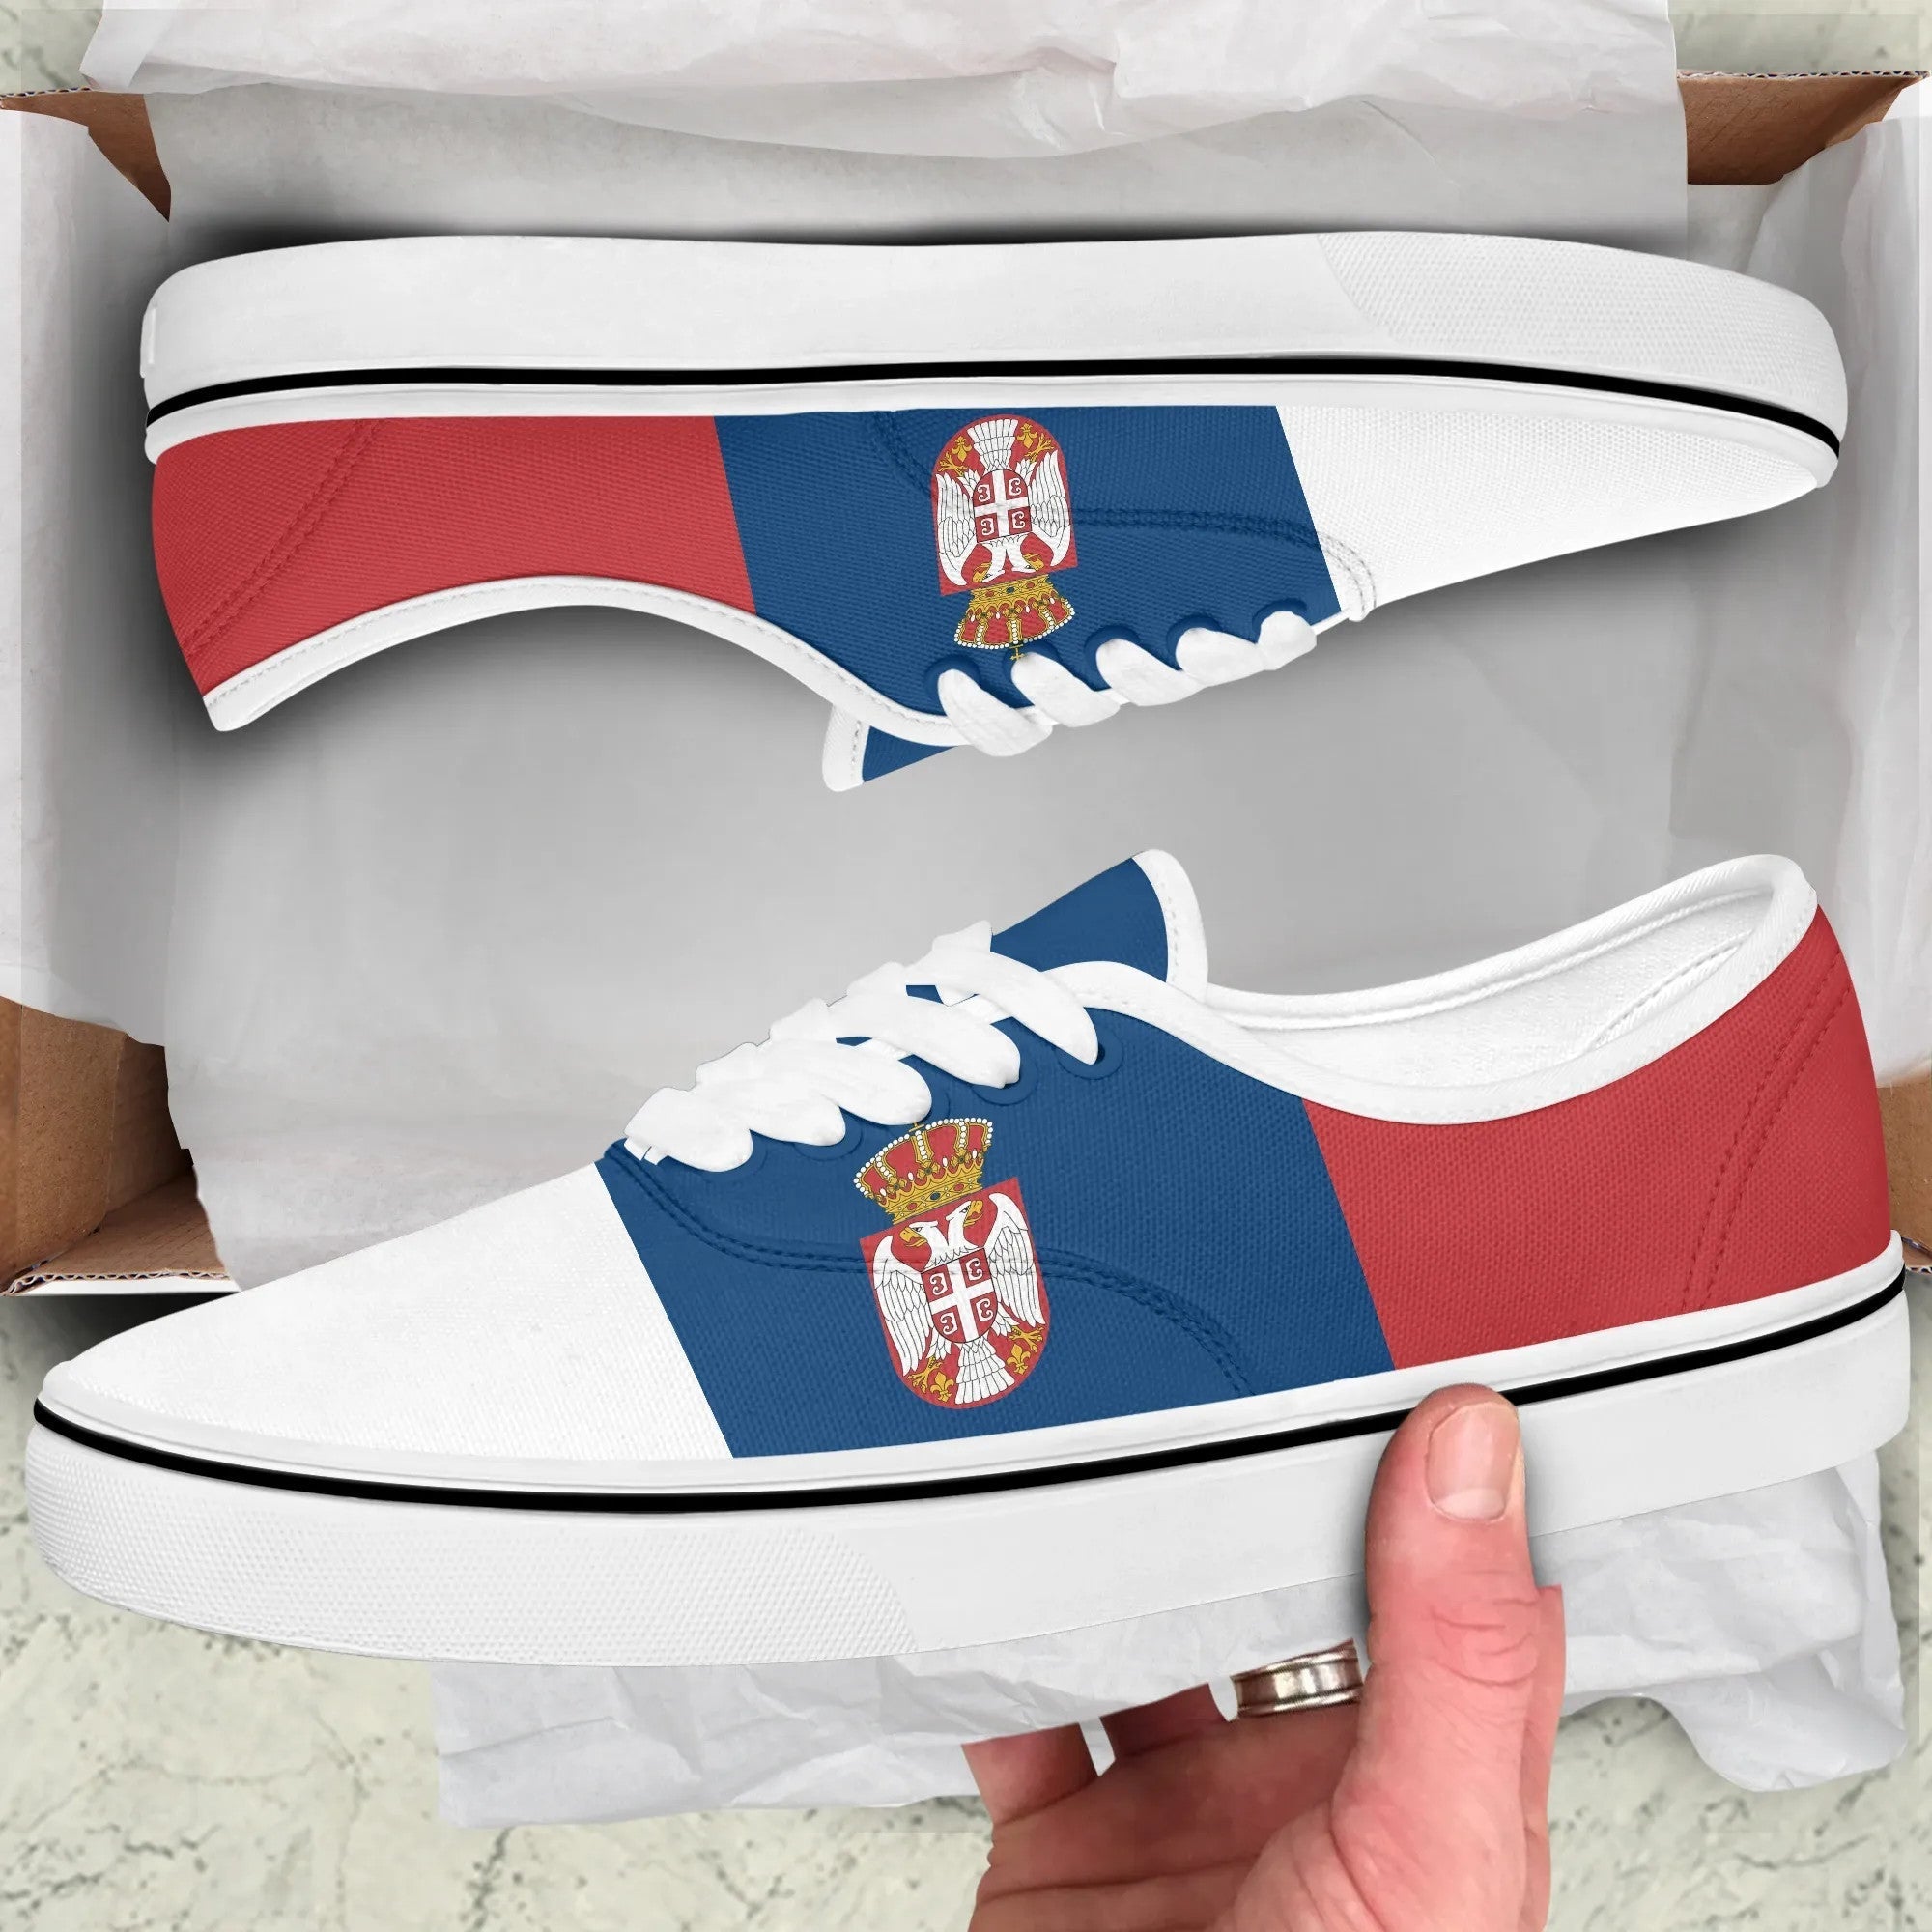 serbia-like-vans-lace-shoes-womensmens